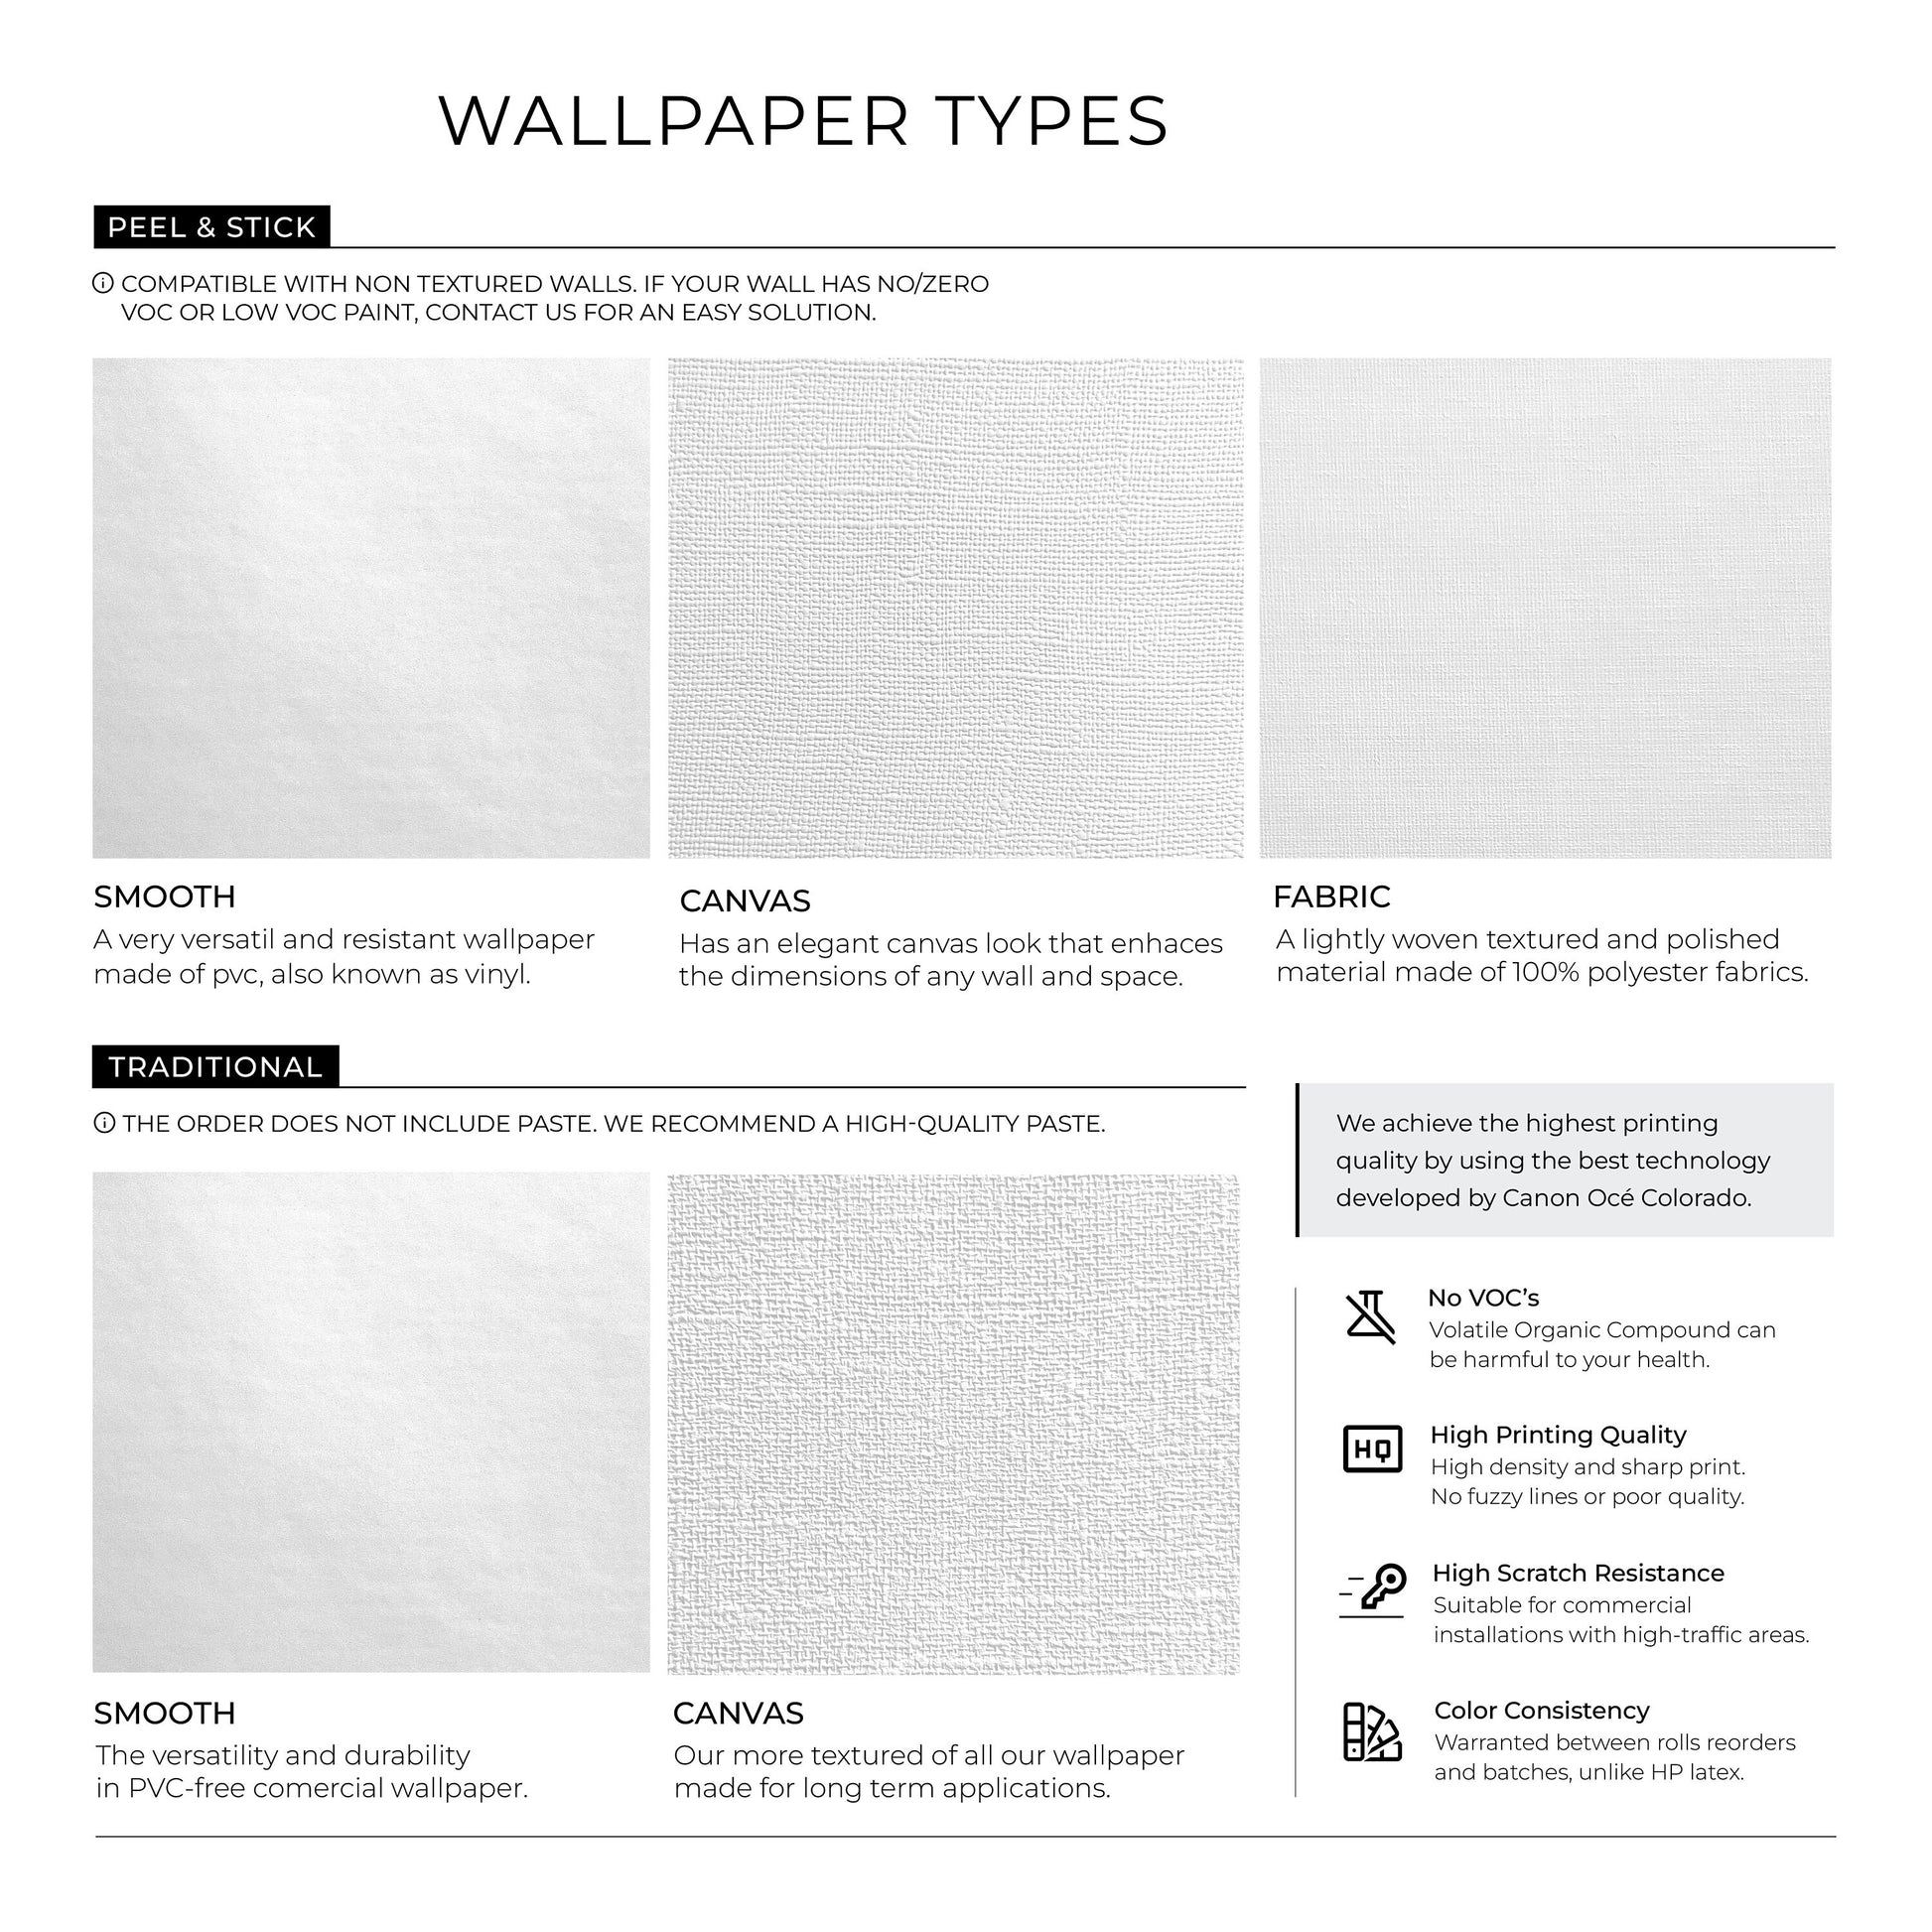 Removable Wallpaper Scandinavian Wallpaper Minimalist Geometric Wallpaper Peel and Stick Wallpaper Wall Paper - B294